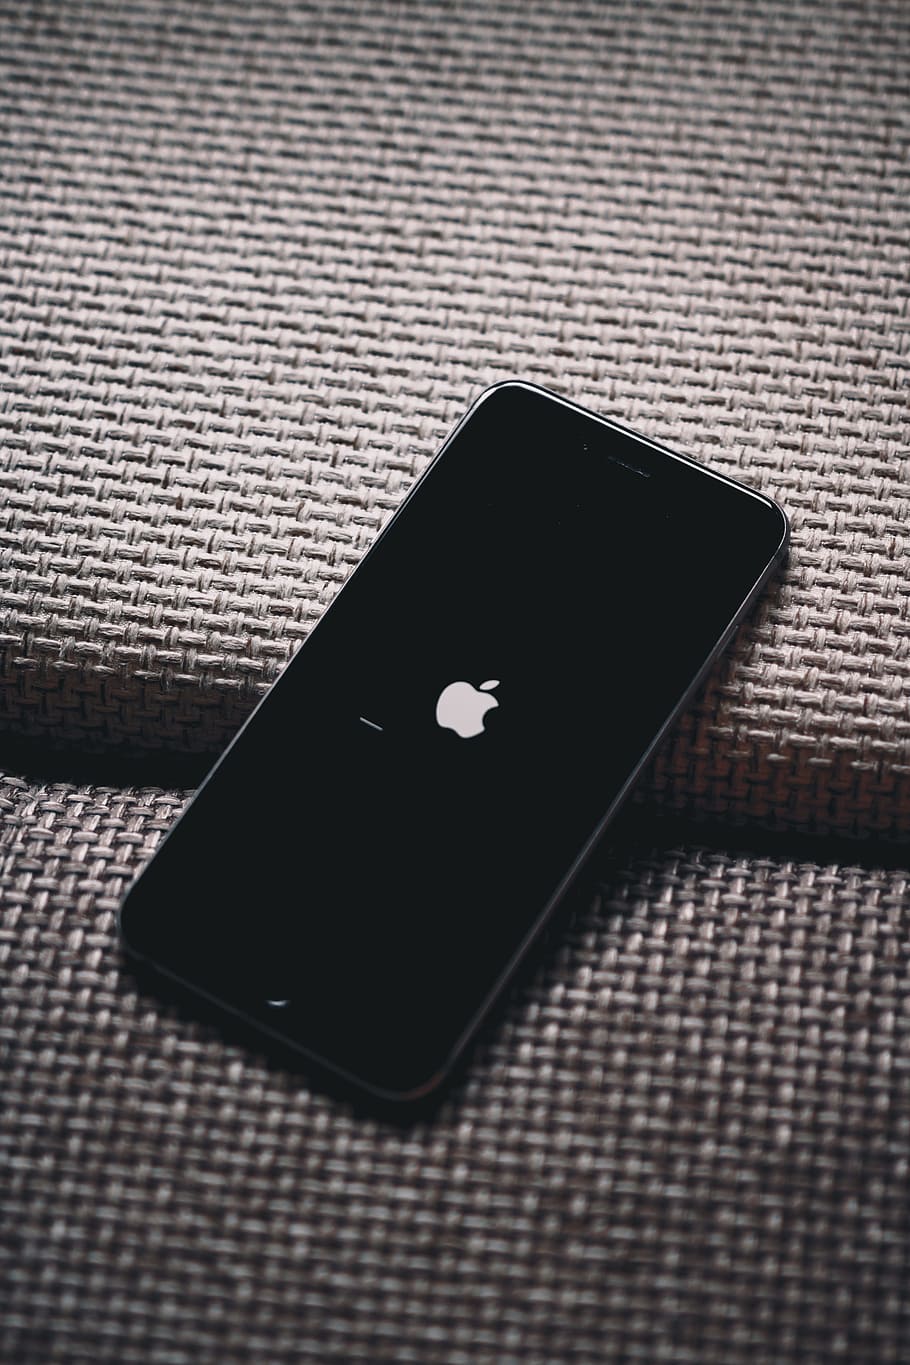 iphone 6 1080pのhd壁紙,黒,ガジェット,ipod,スマートフォン,携帯電話